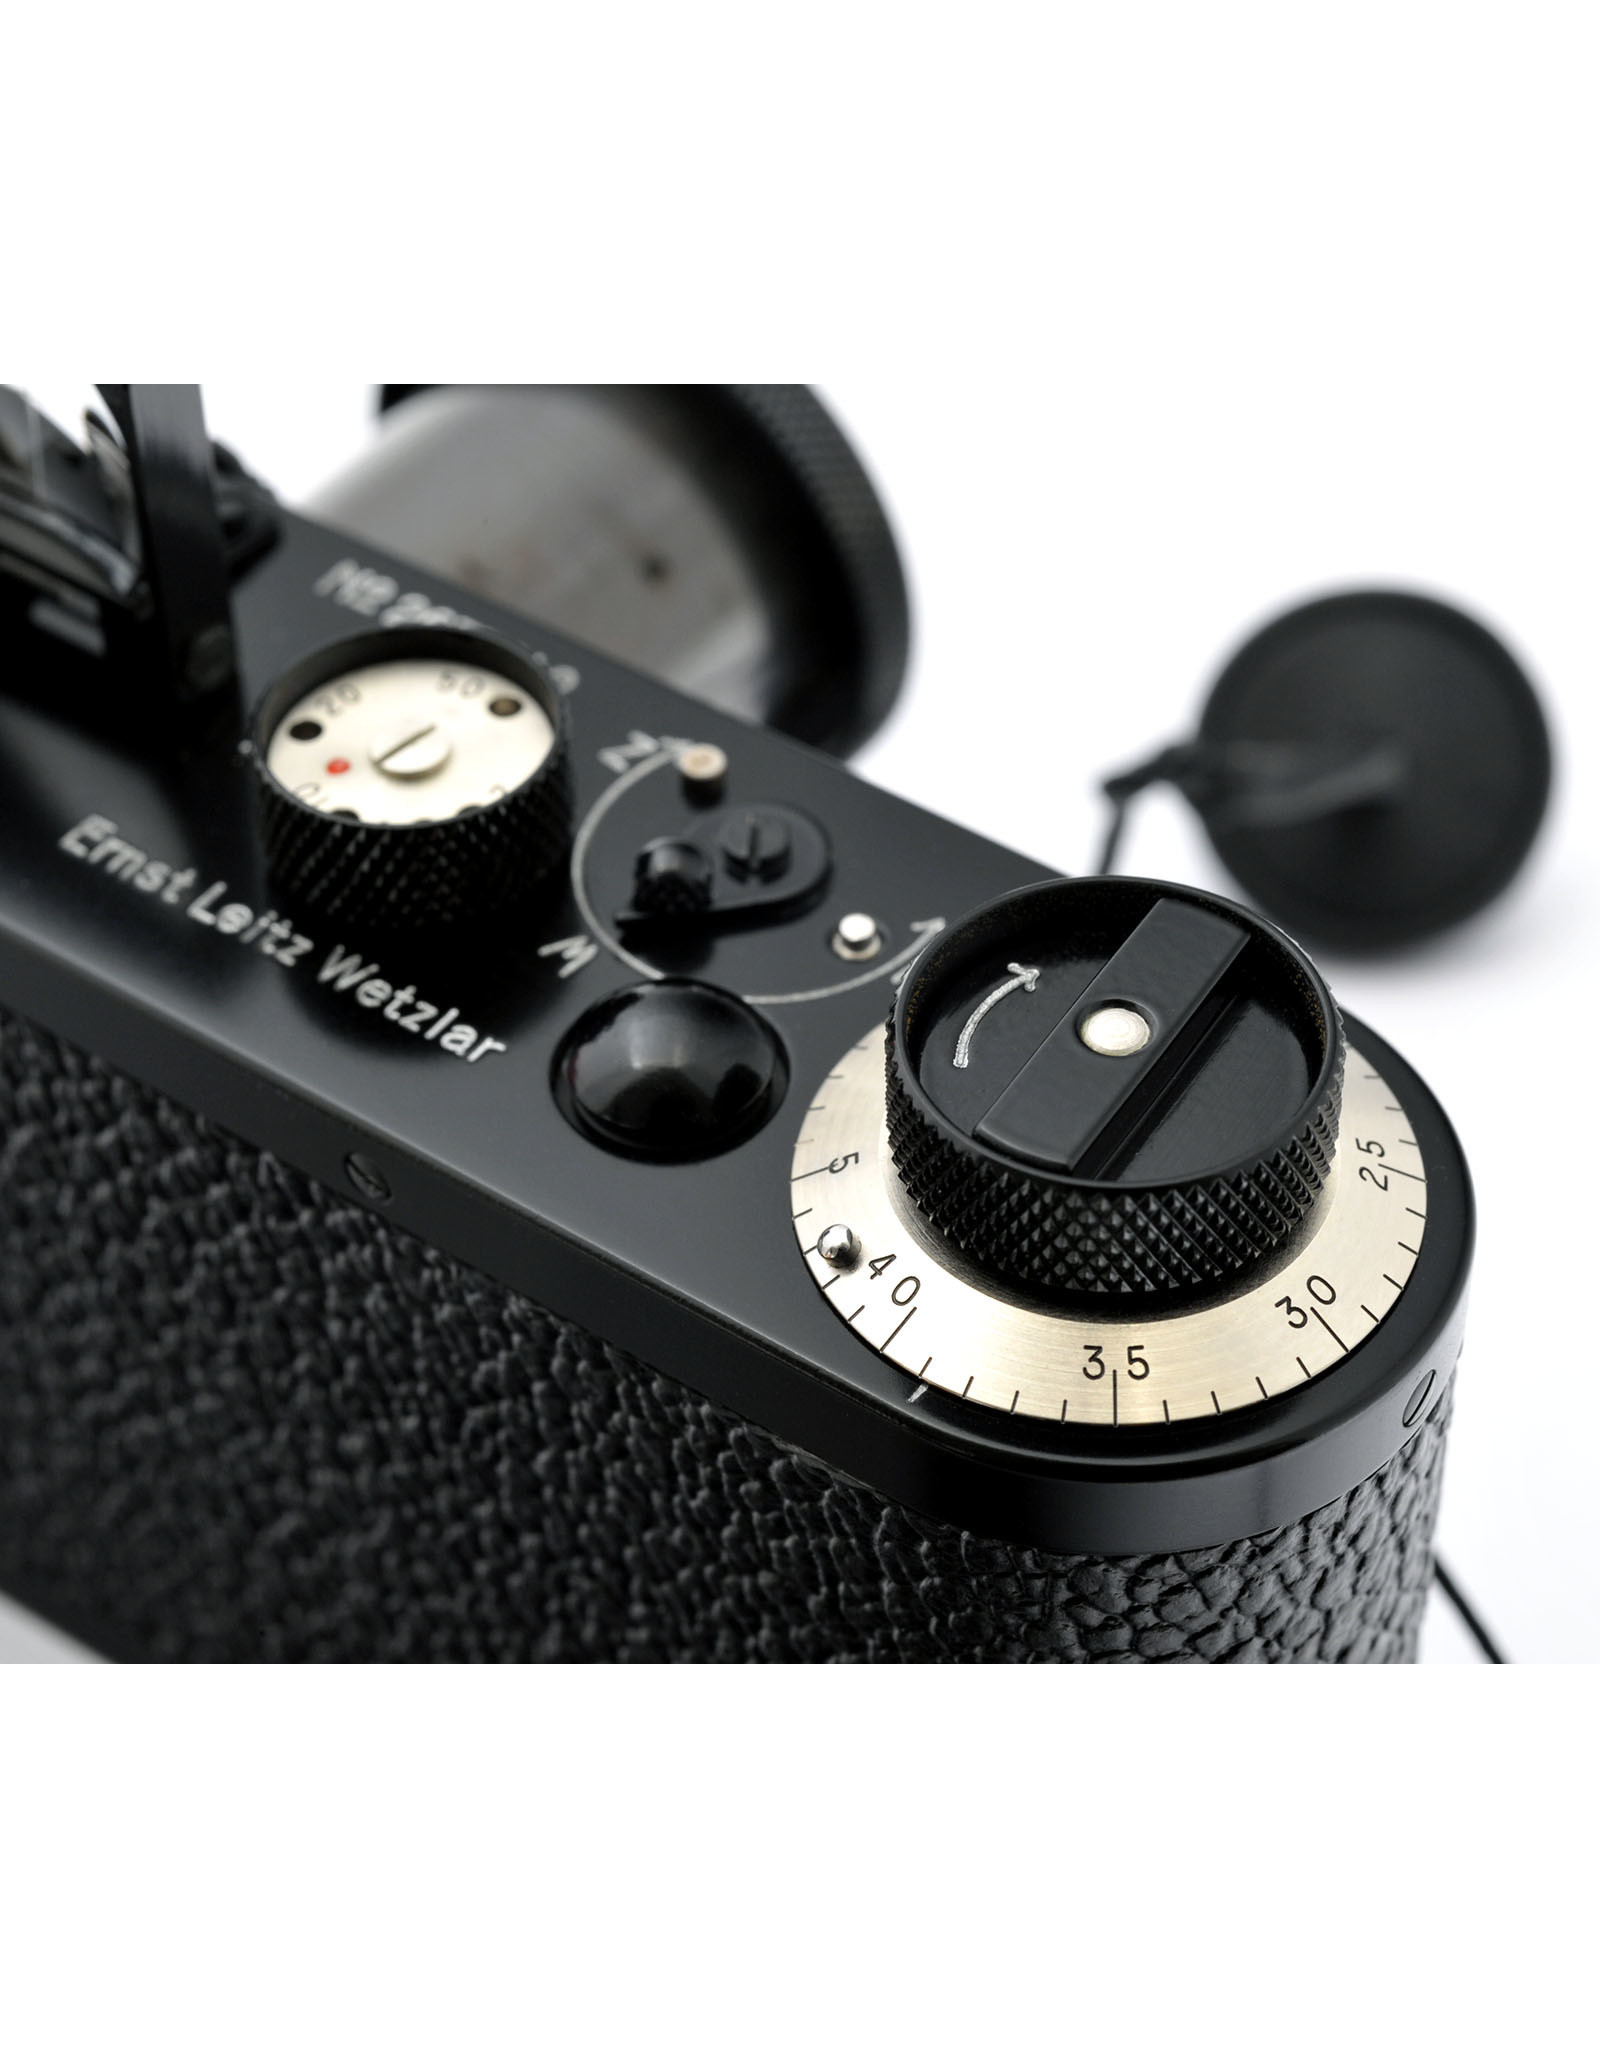 Leica Leica O Serie with 50mm f3.5 Anastigmat   A2093004